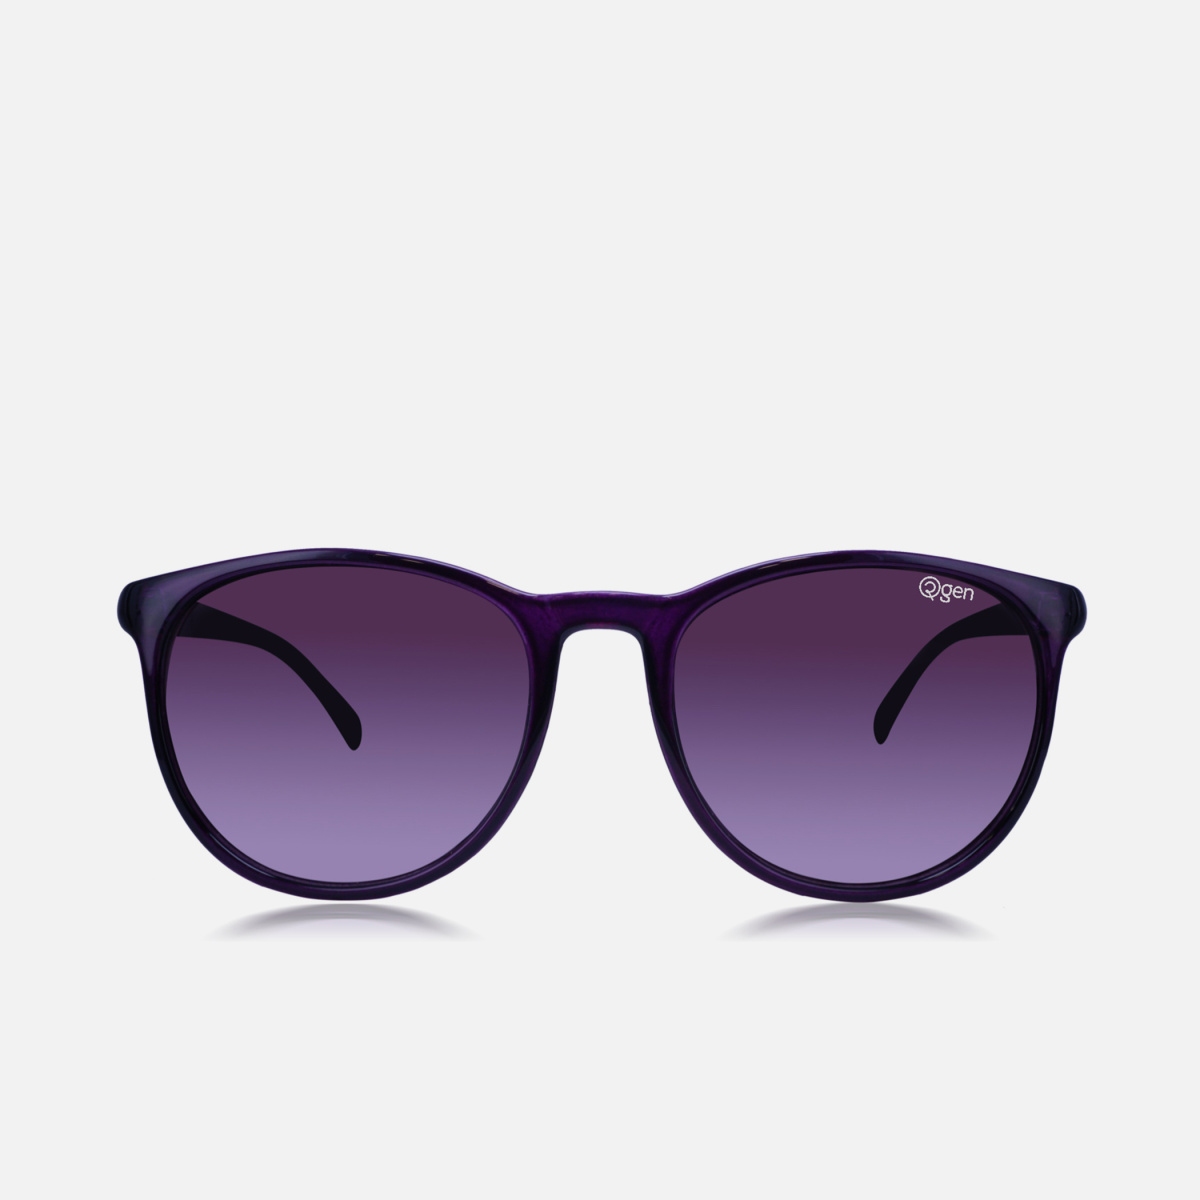 O2GEN Women Solid Oval Sunglasses - O2-21-011-C2